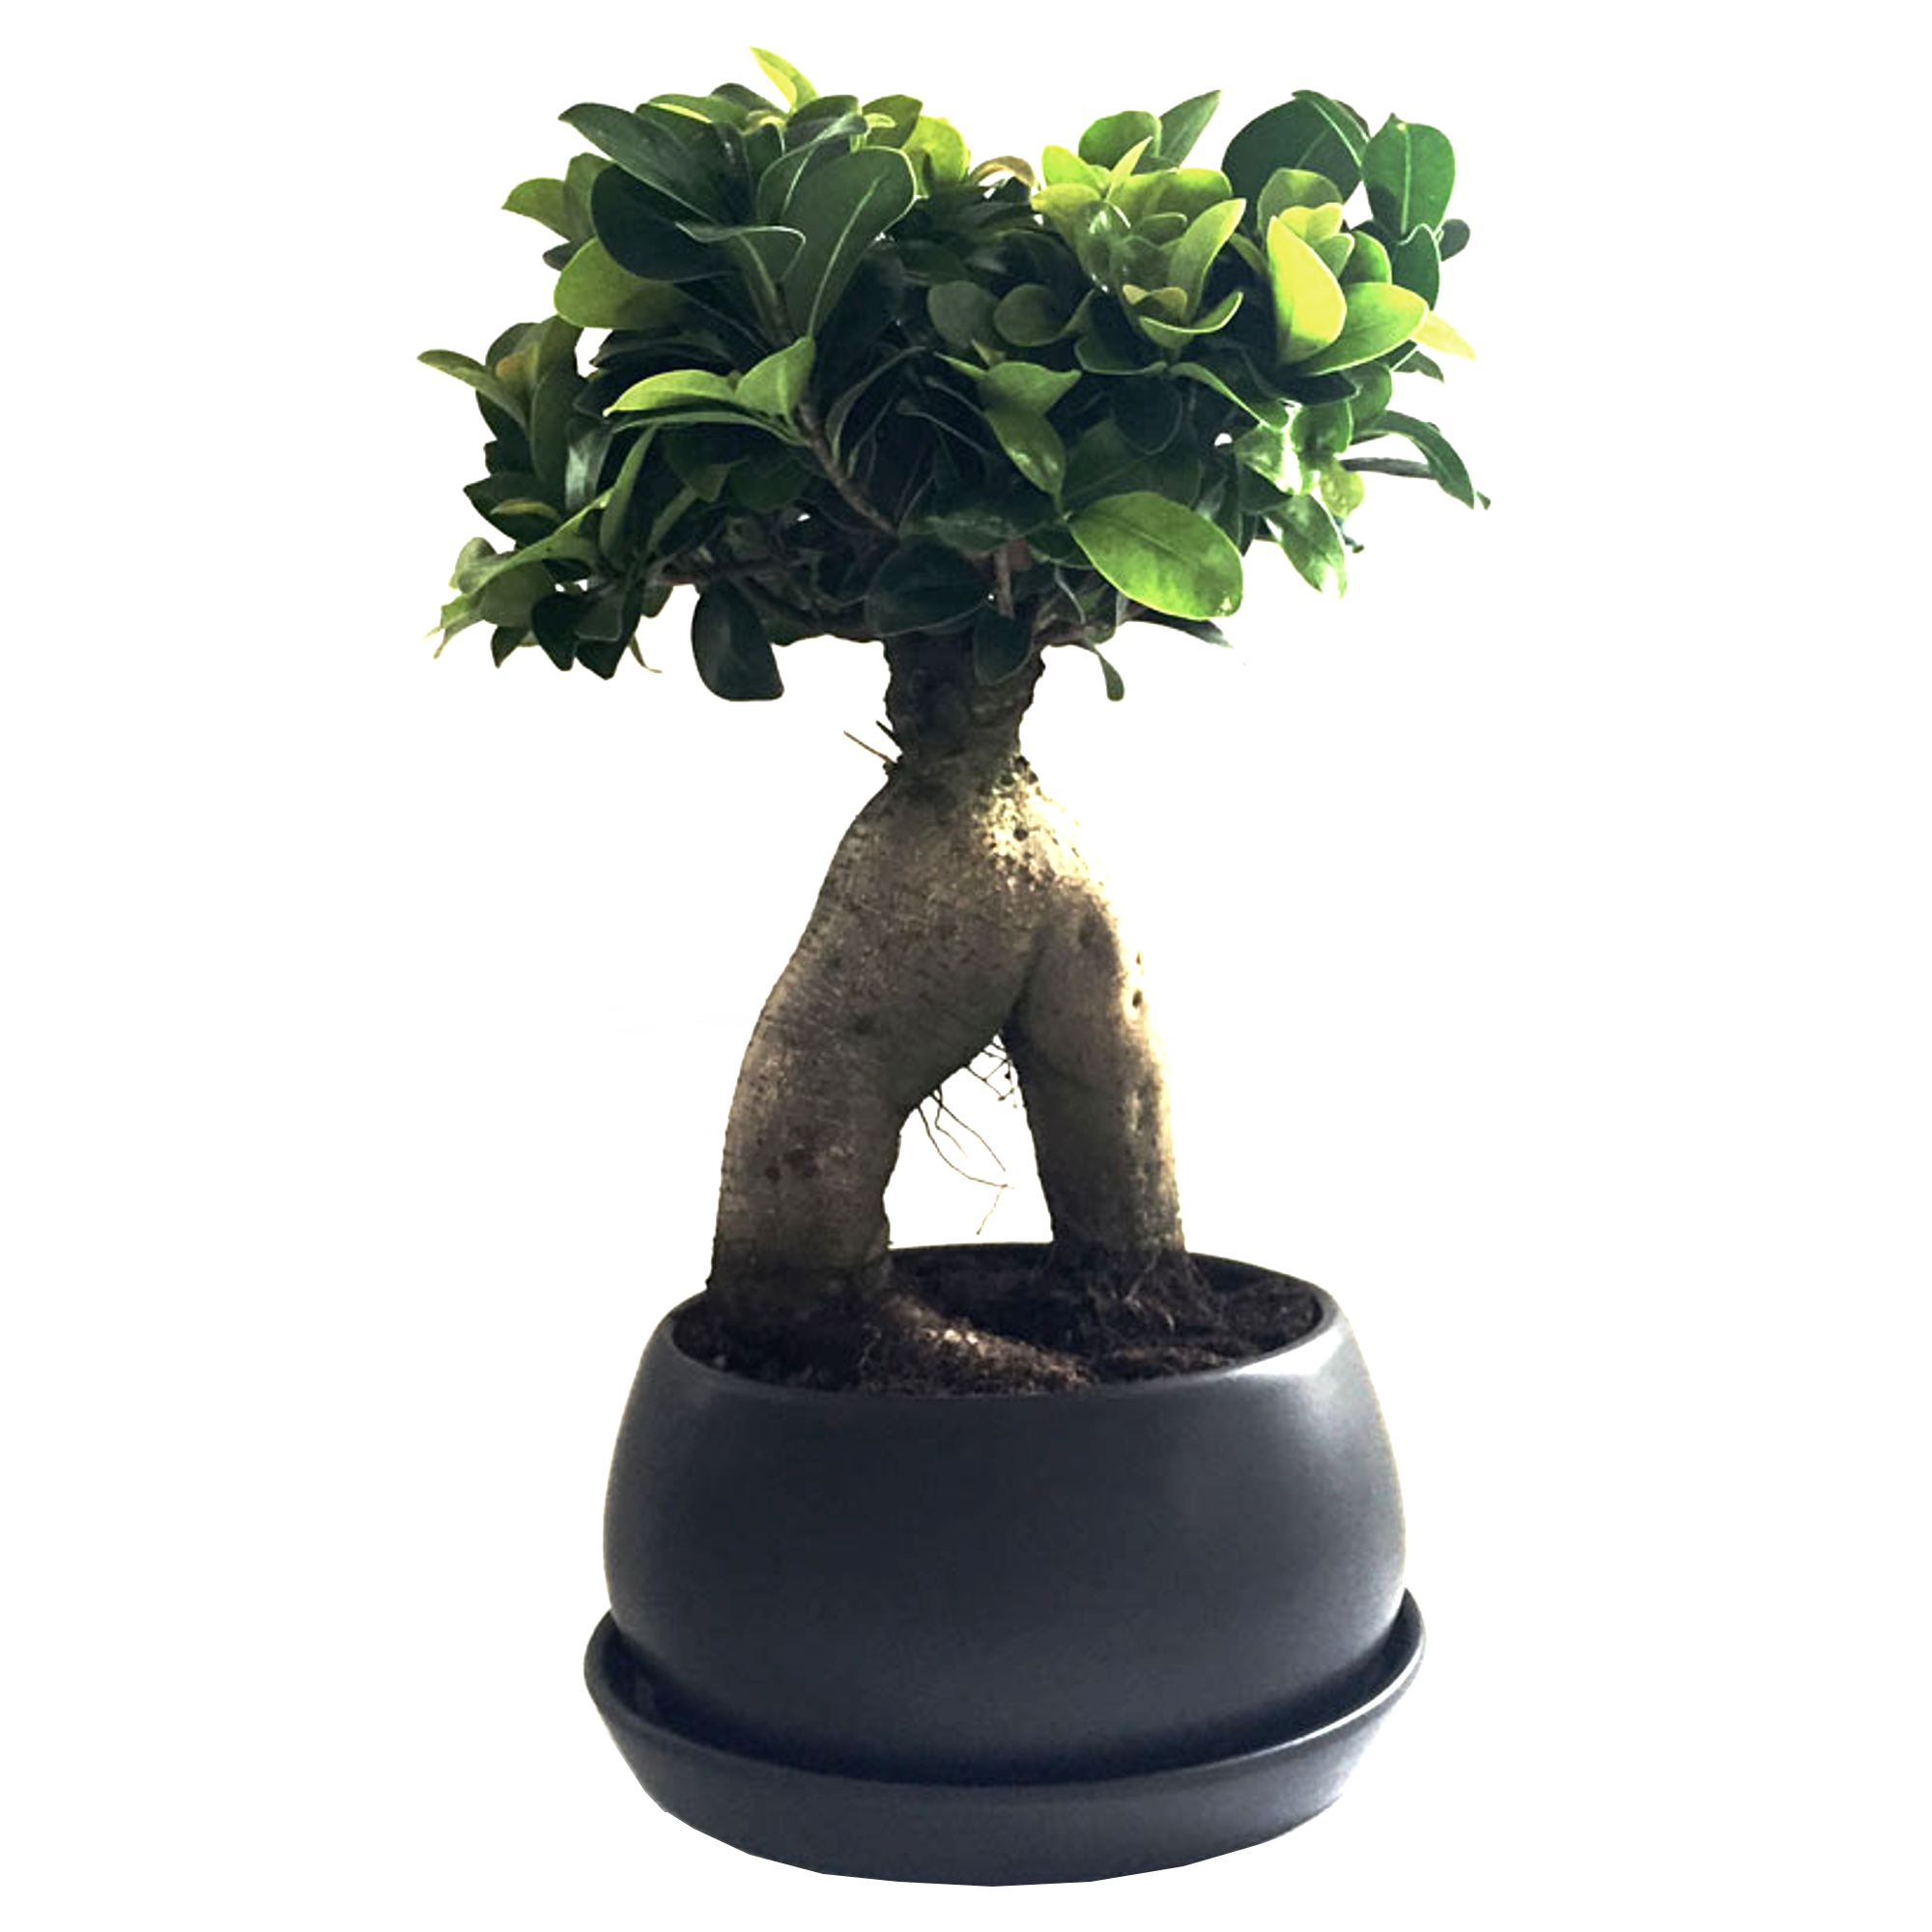 Zimmerbonsai Ficus 'Ginseng' in Schale schwarz 19 cm + product picture